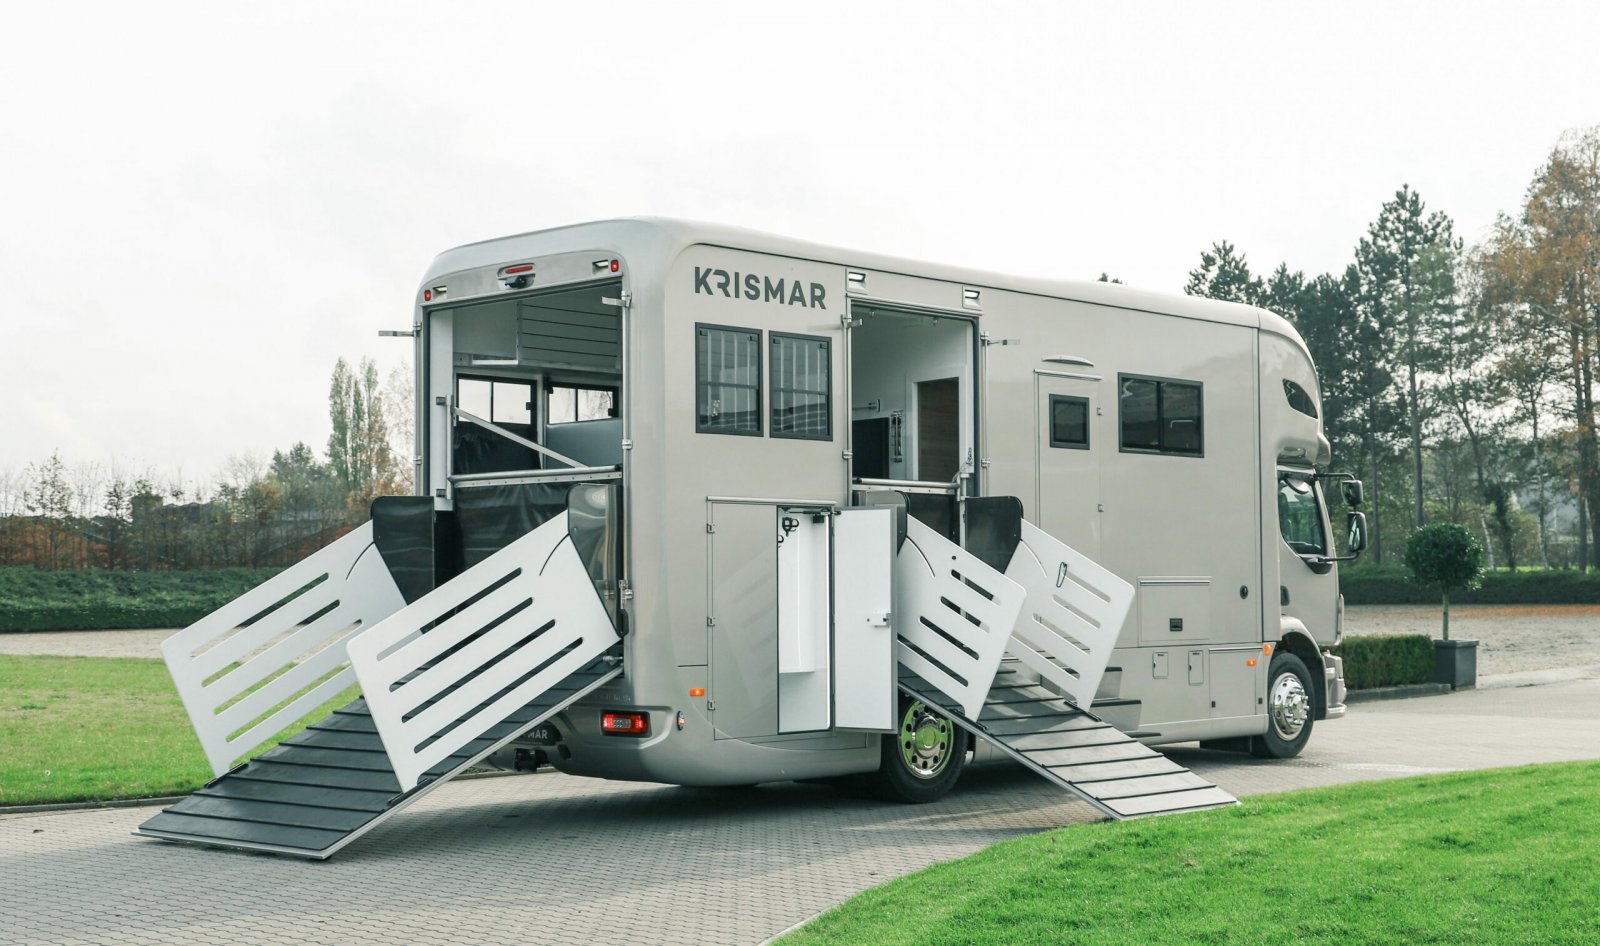 Krismar-Horse-Trucks-professional-line-for-4-horses-11882-scaled-aspect-ratio-2219-1312-scaled.jpg